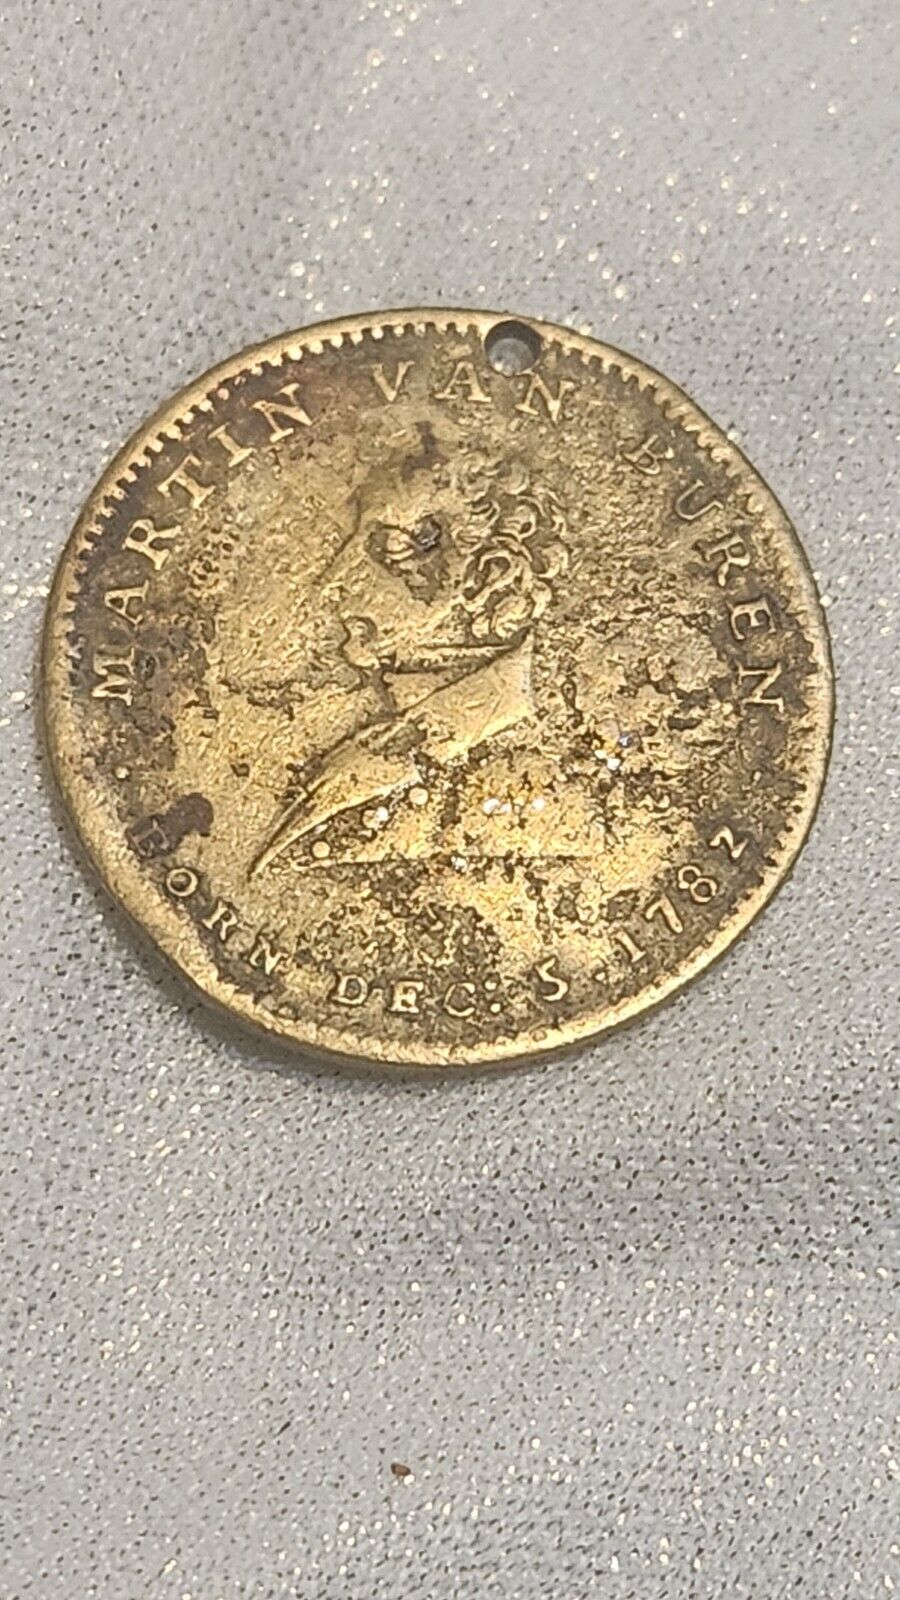 1836 1840 Martin Van Buren election democrat campaign token coin original medal